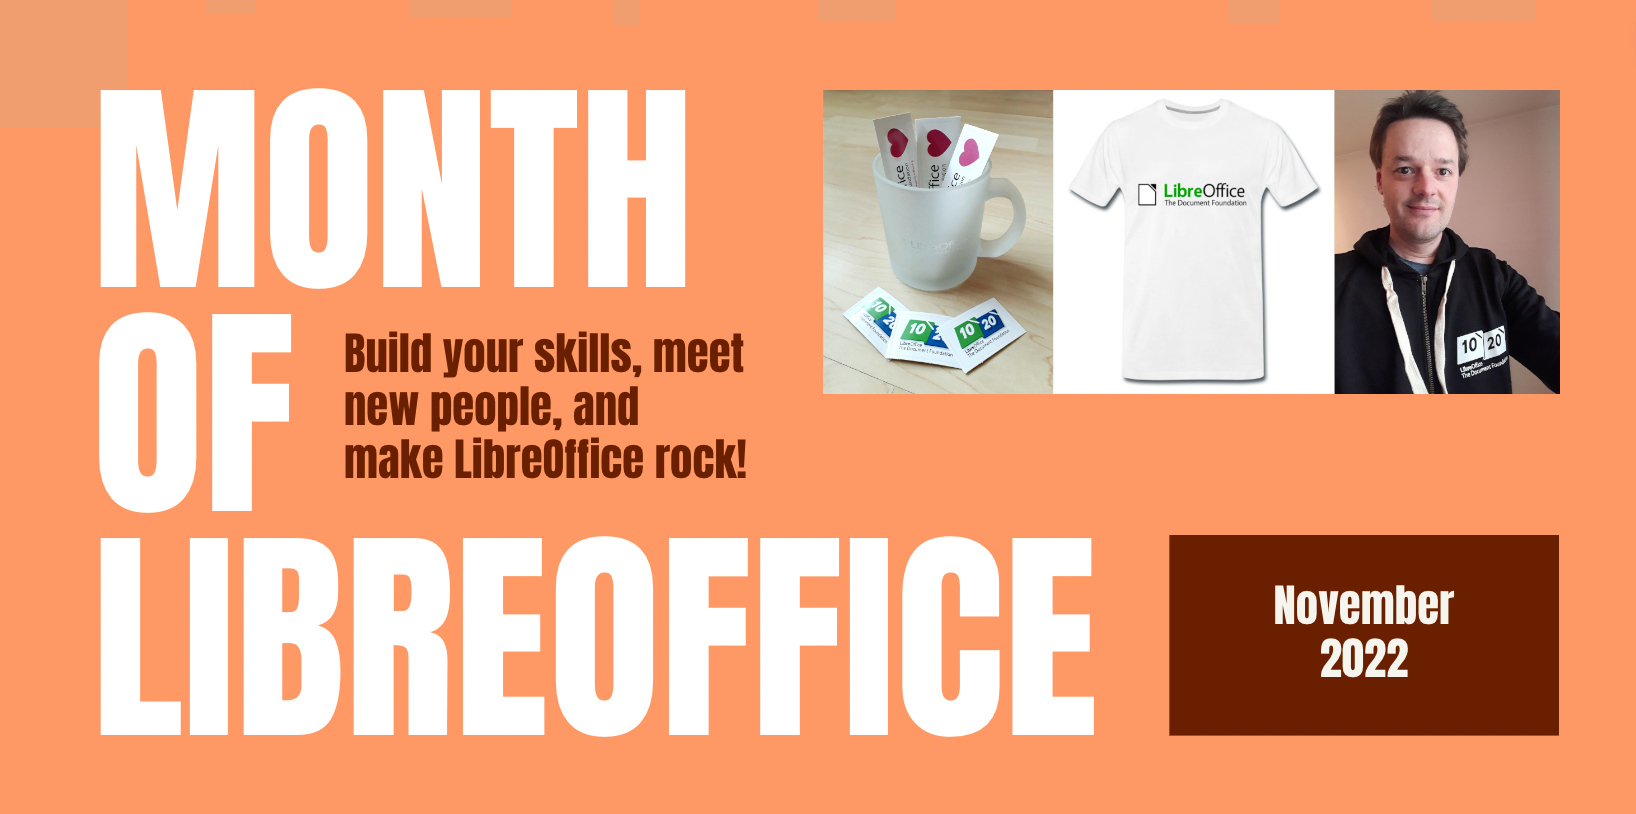 LibreOffice merchandise